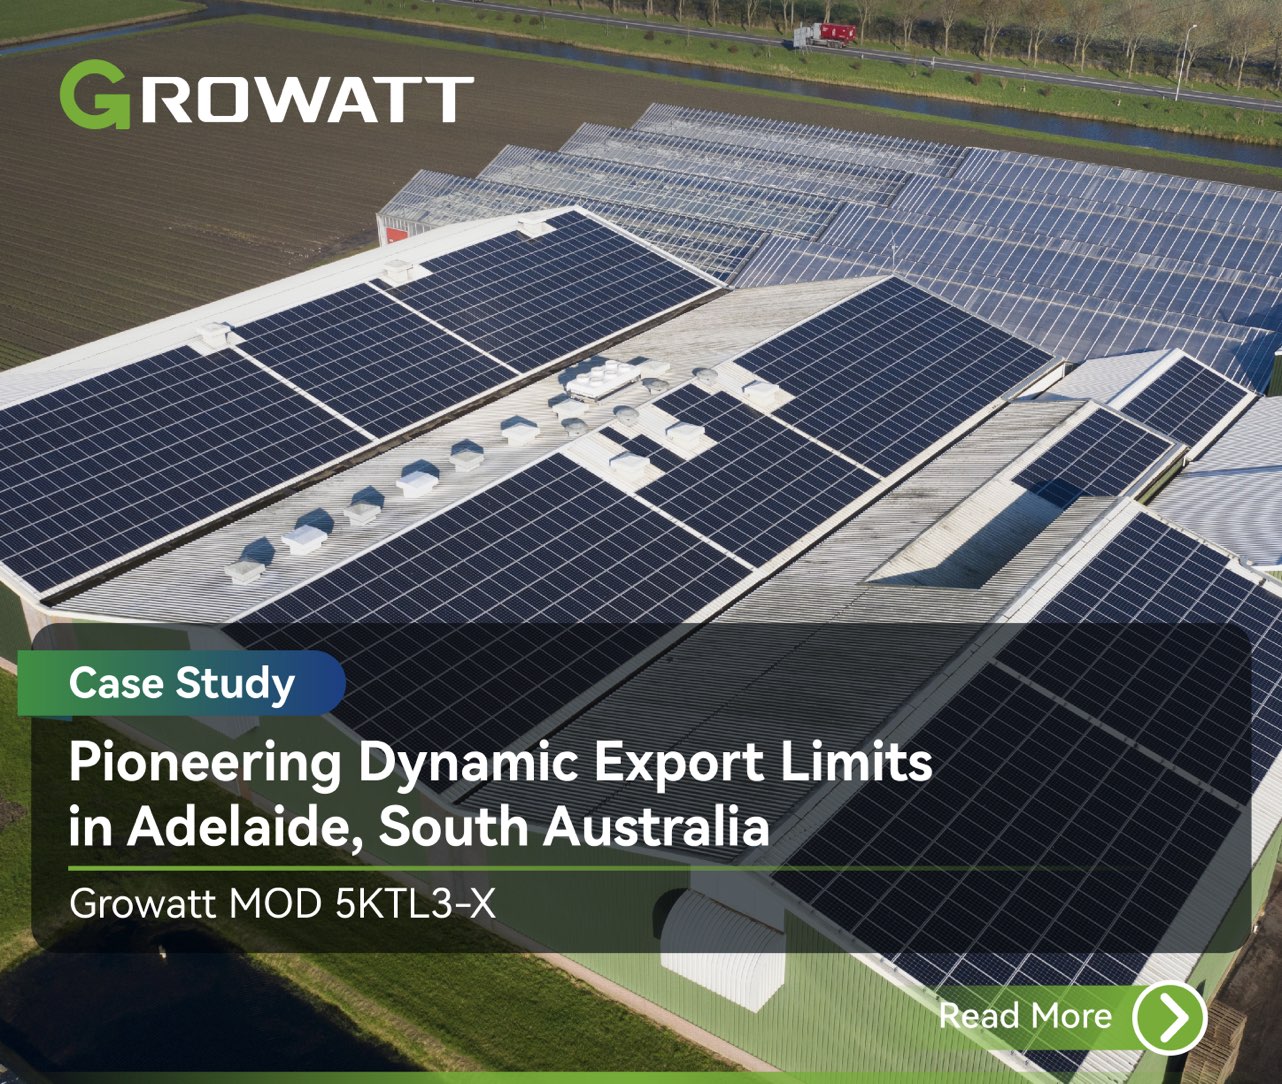 Growatt MOD 5KTL3-X: Pioneering Dynamic Export Limits in Adelaide, South Australia